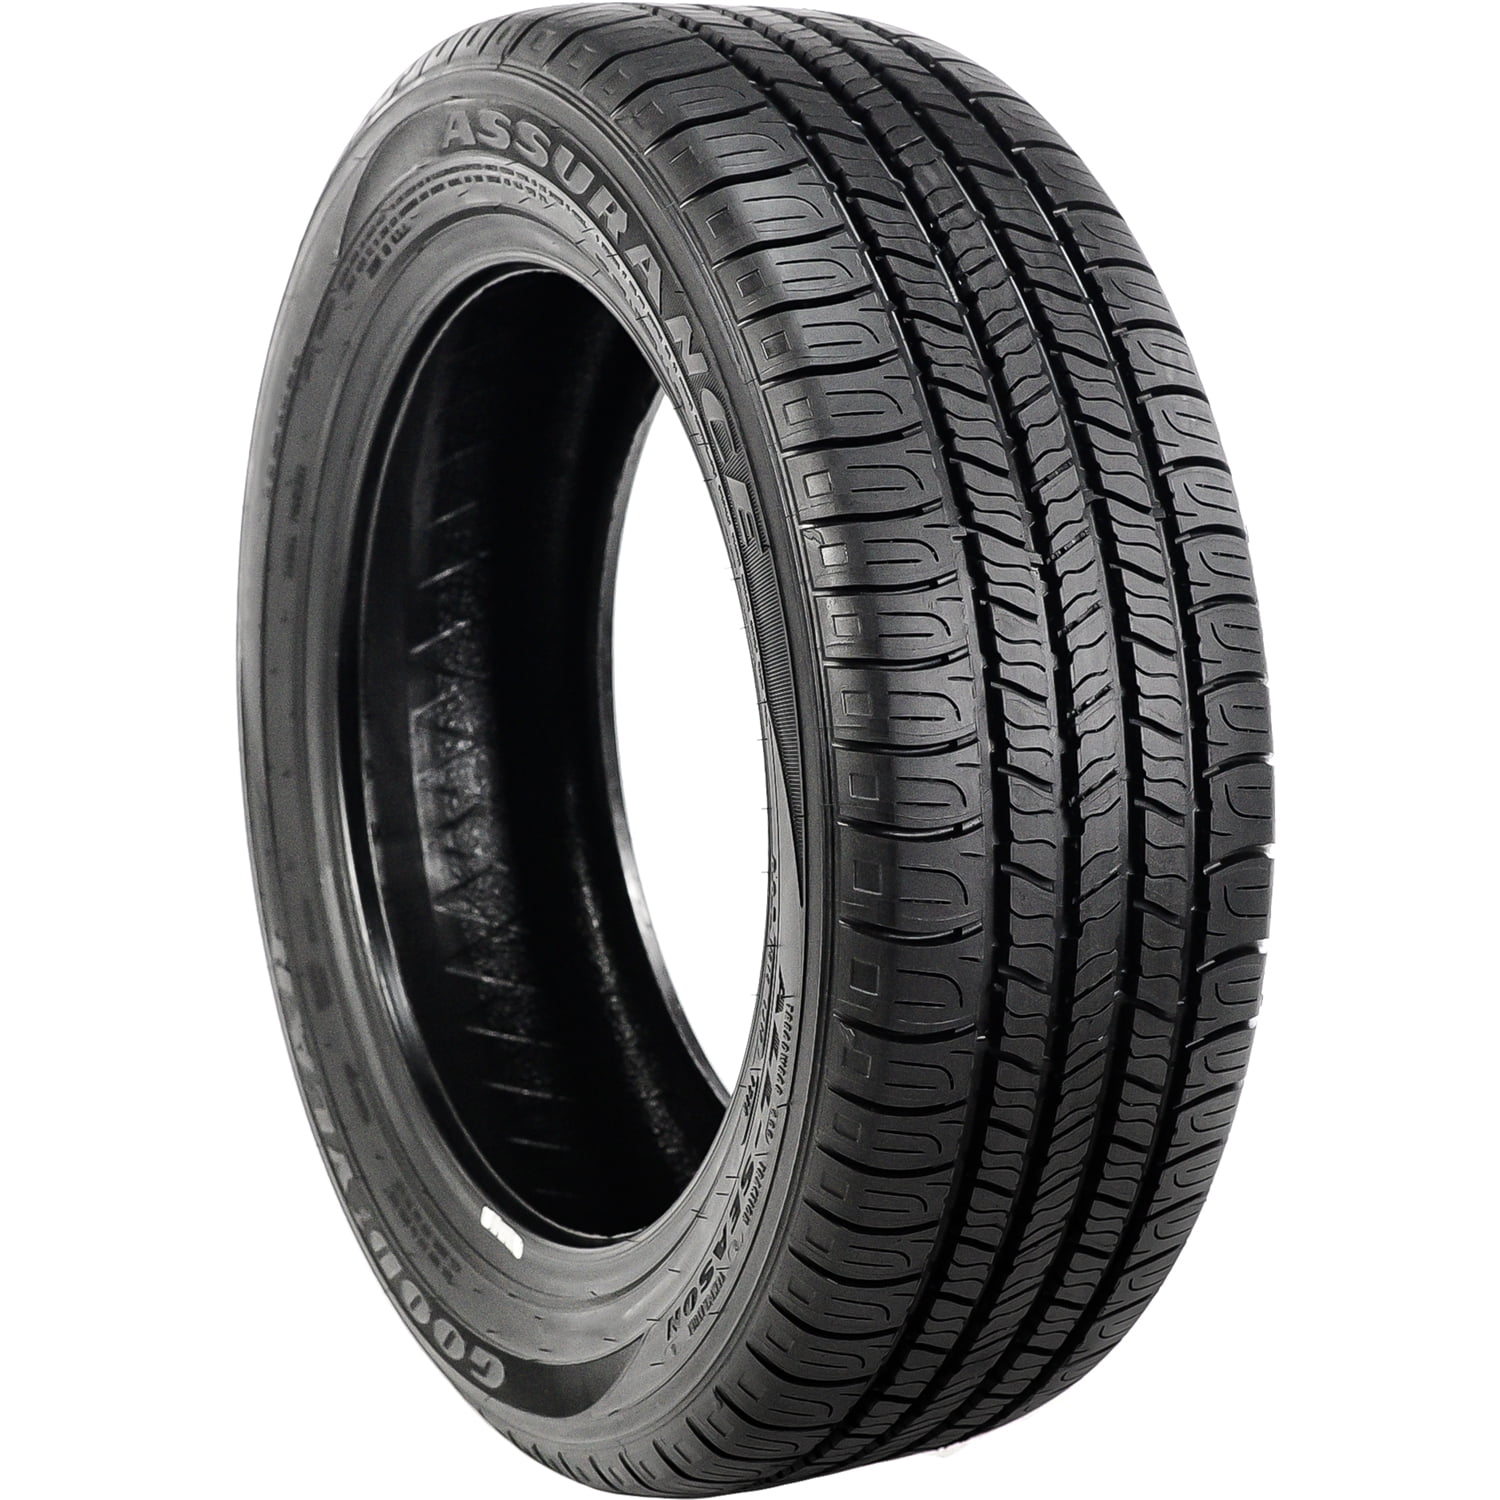 Goodyear Assurance All-Season 225/60R16 98 Tire T